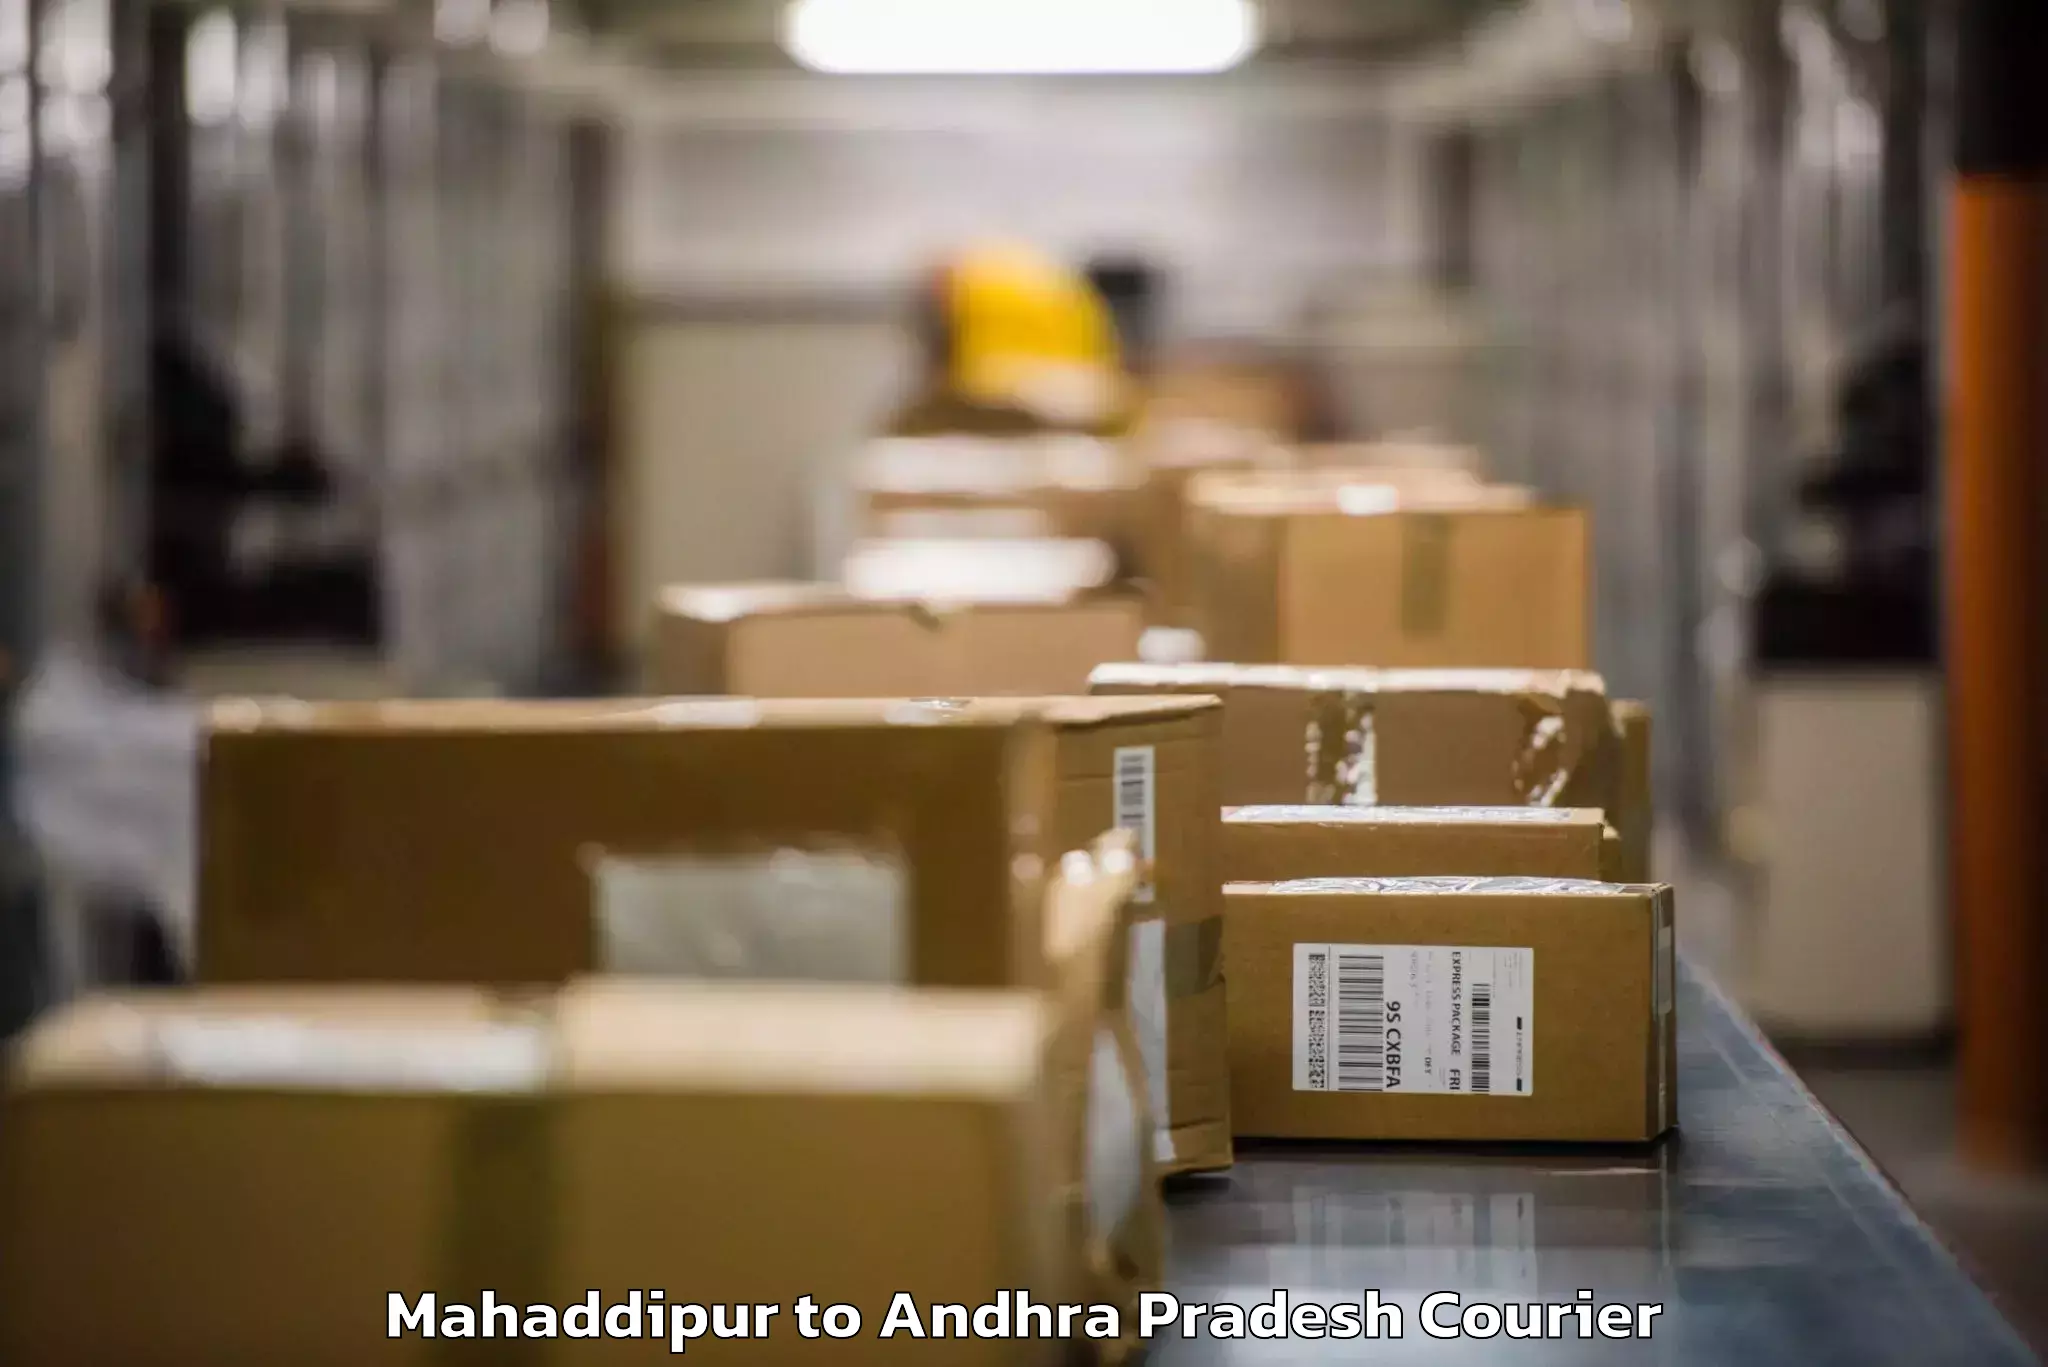 Baggage delivery technology Mahaddipur to Velgodu